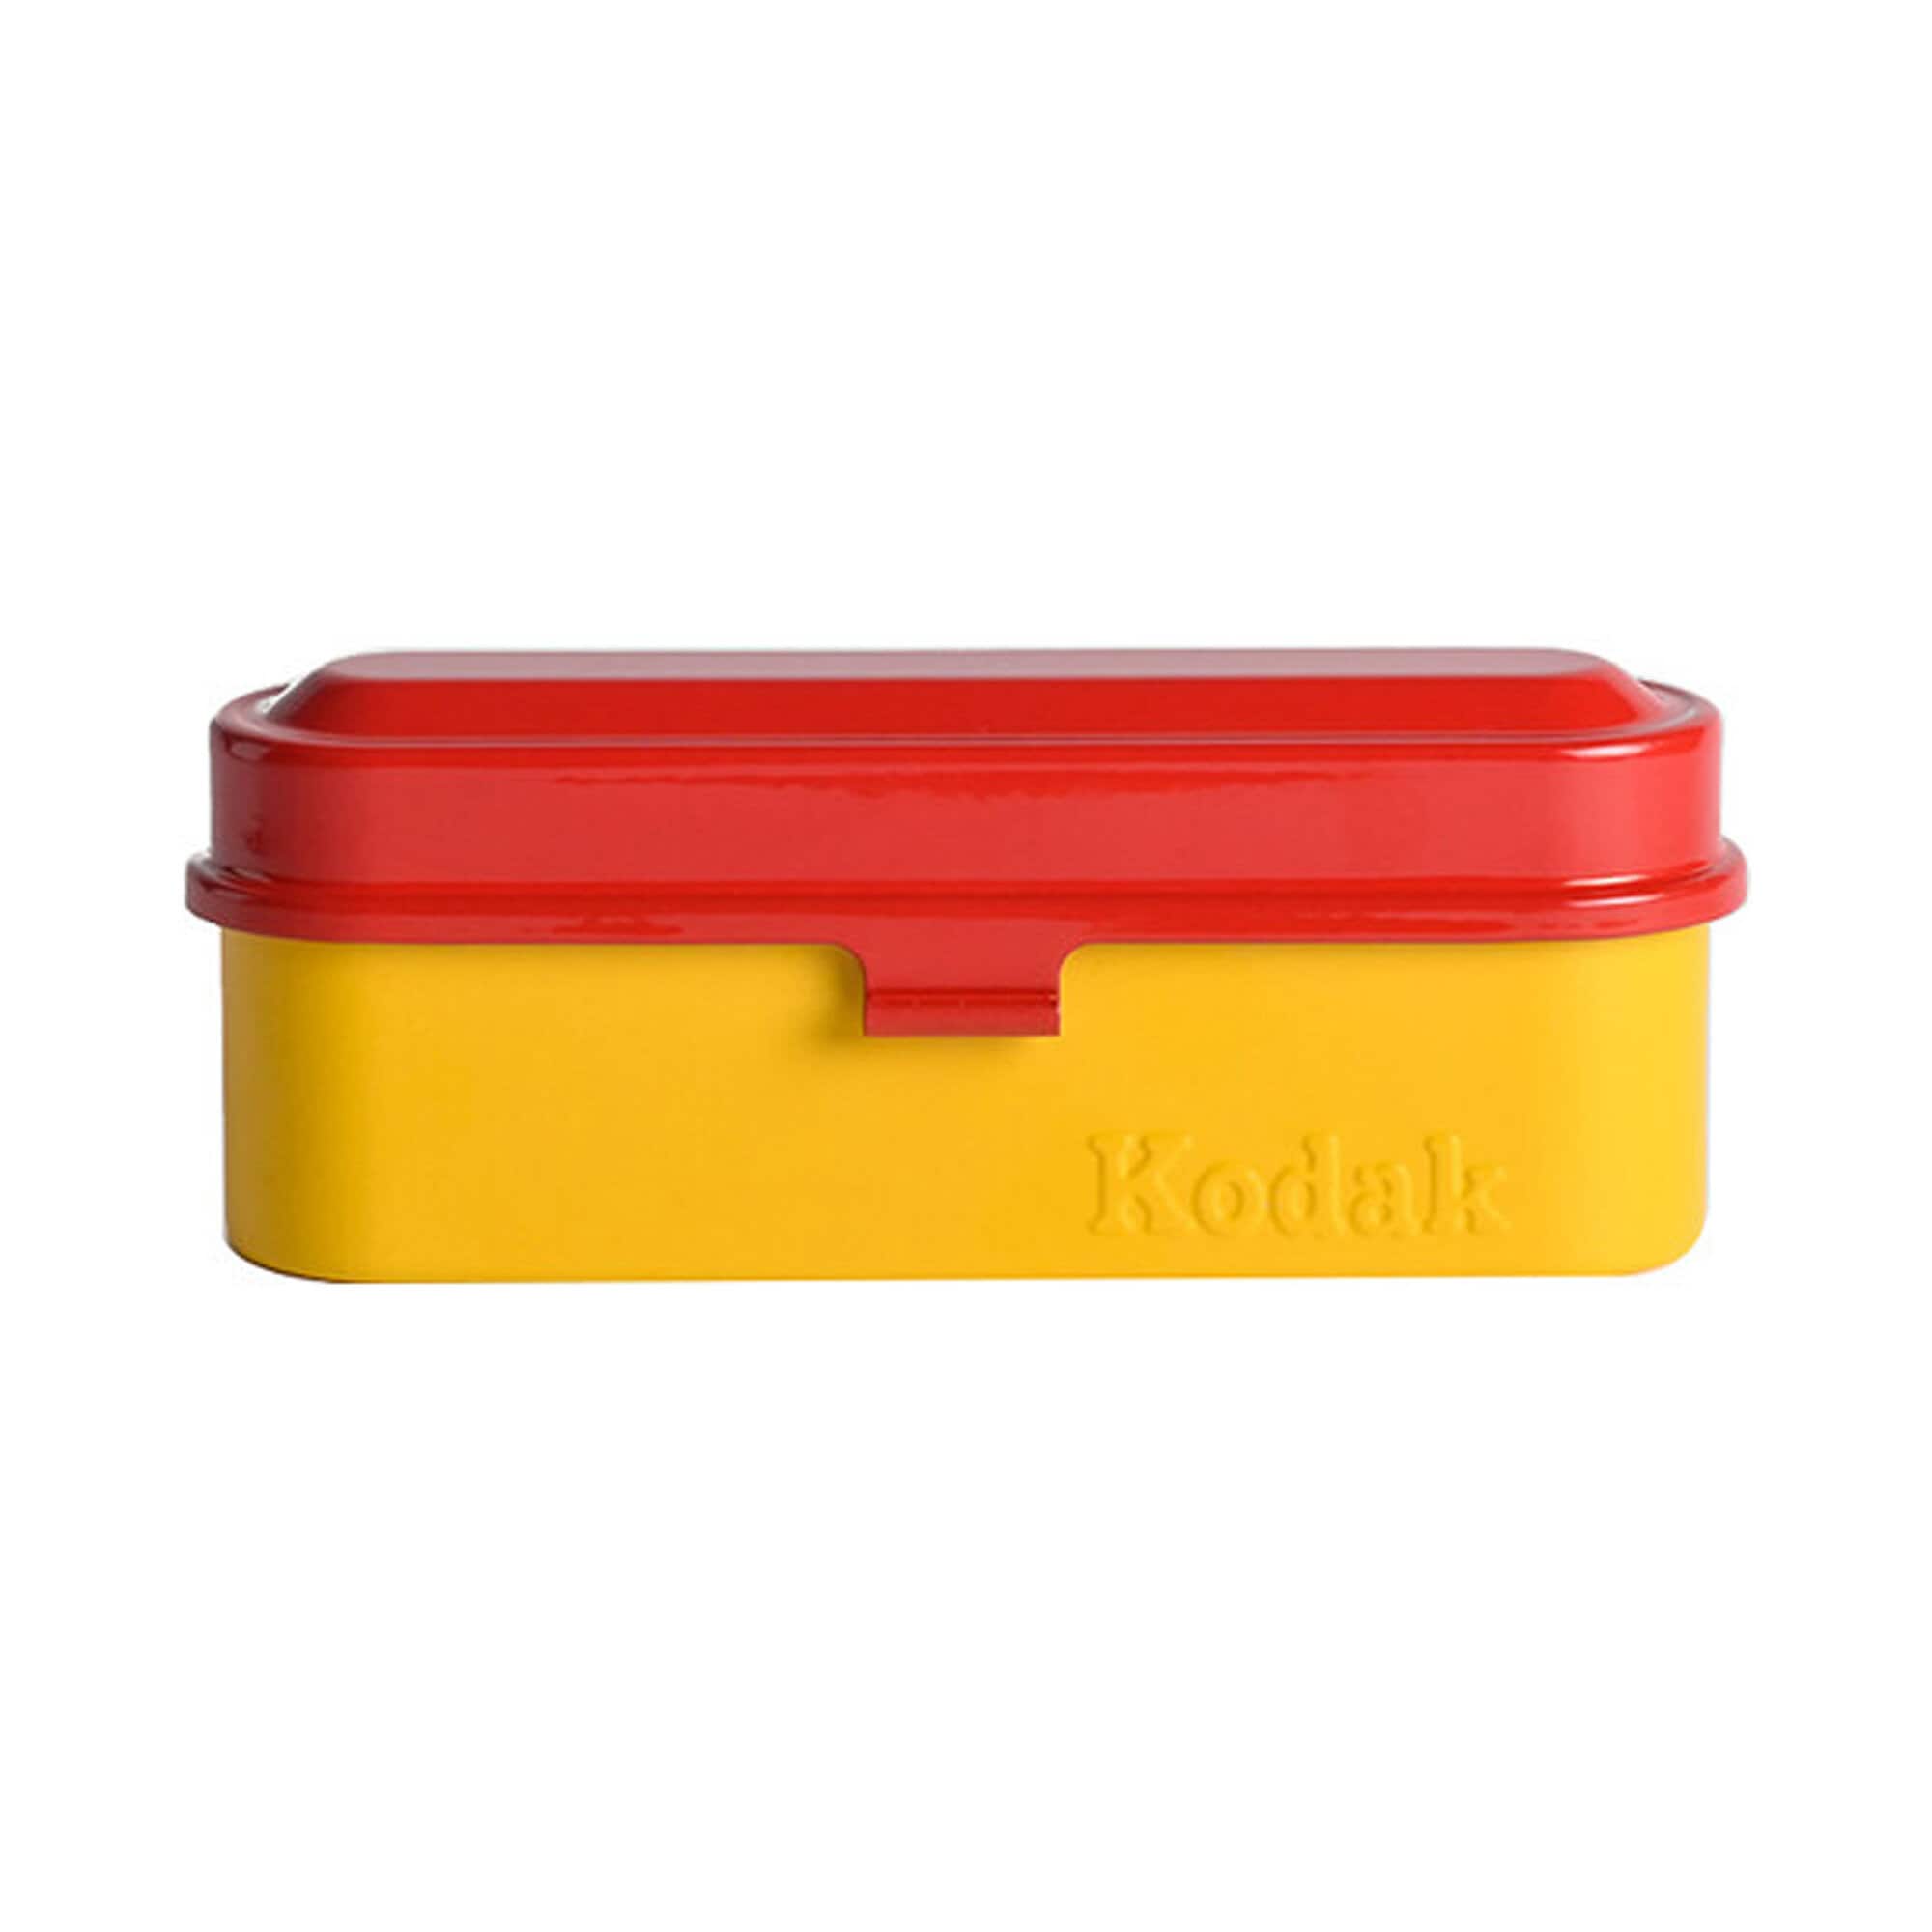 Kodak Film Steel Case Yellow with Red lid 135